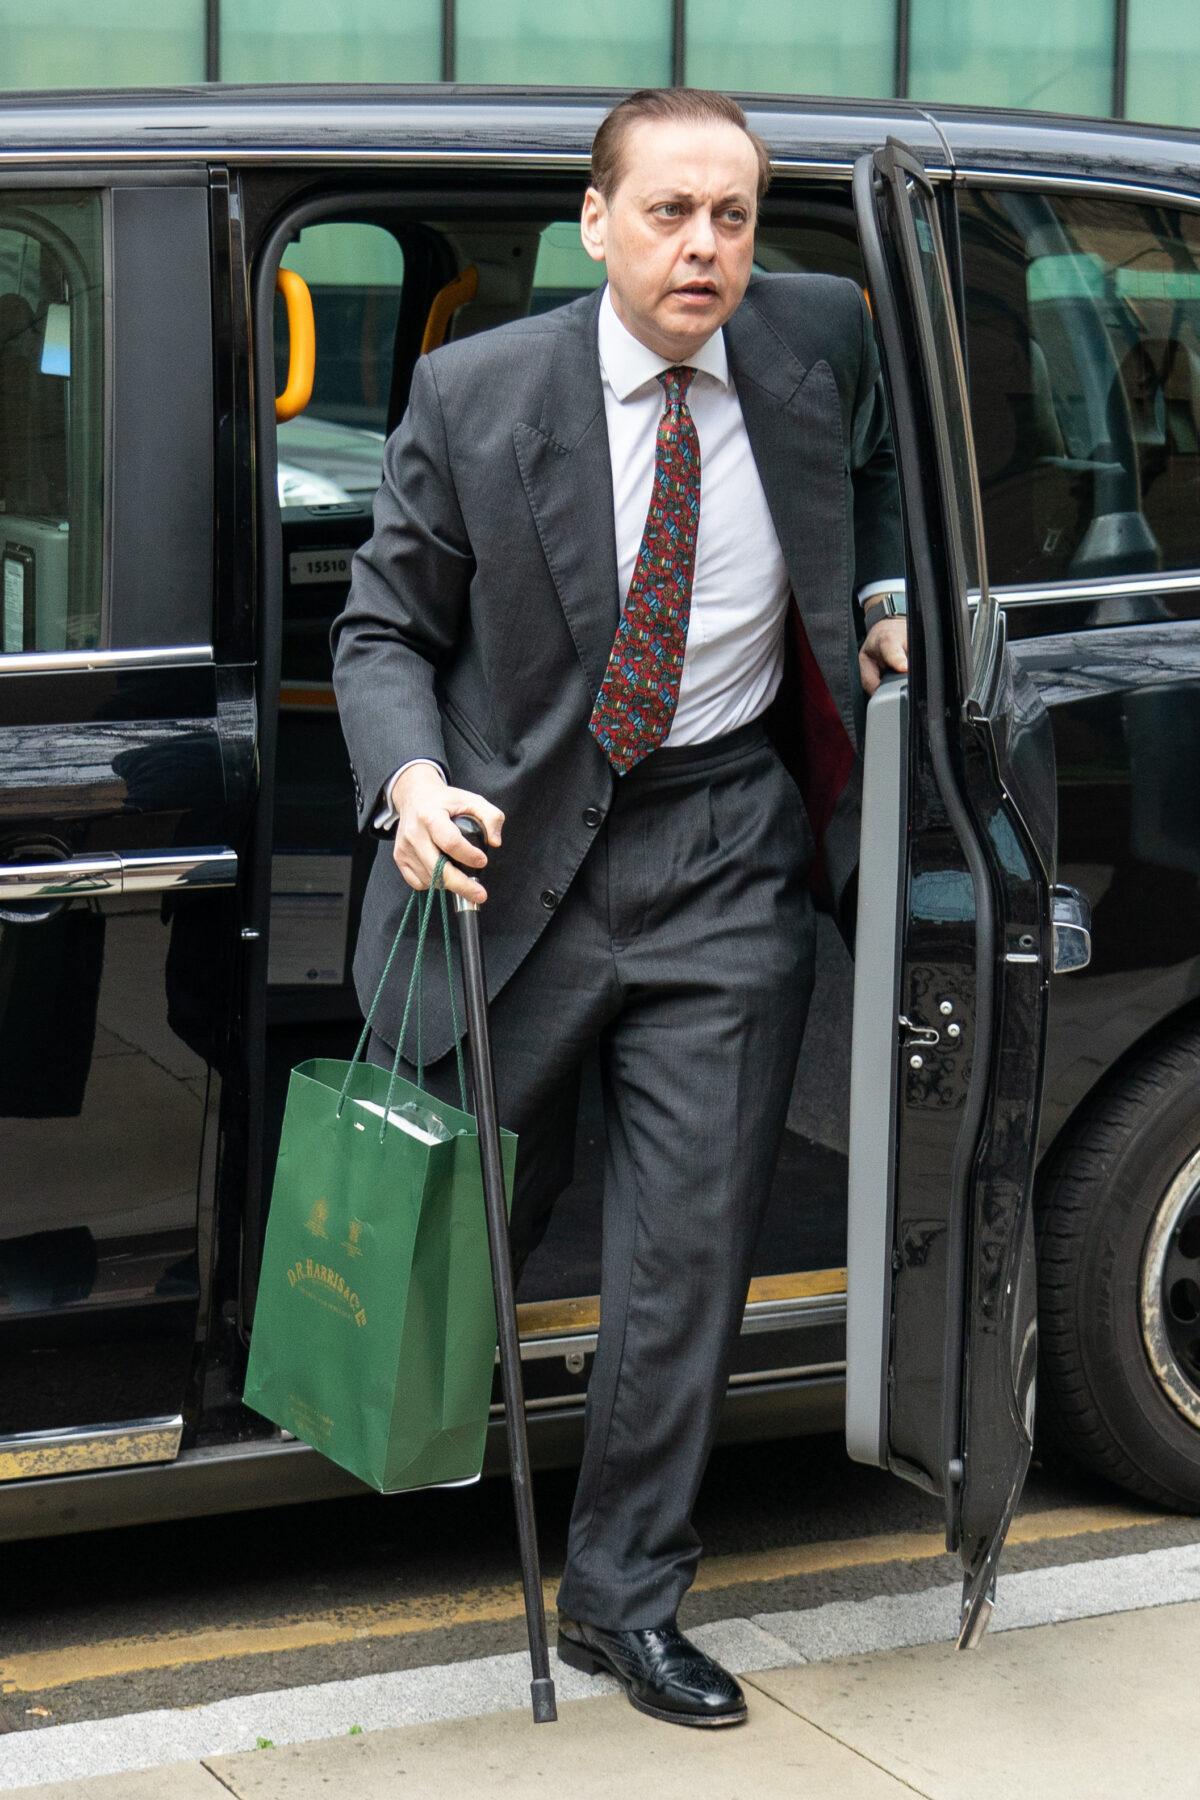 Imran Ahmad Khan arrives at Southwark Crown Court in London on April 11, 2022. (Dominic Lipinski/PA Media)